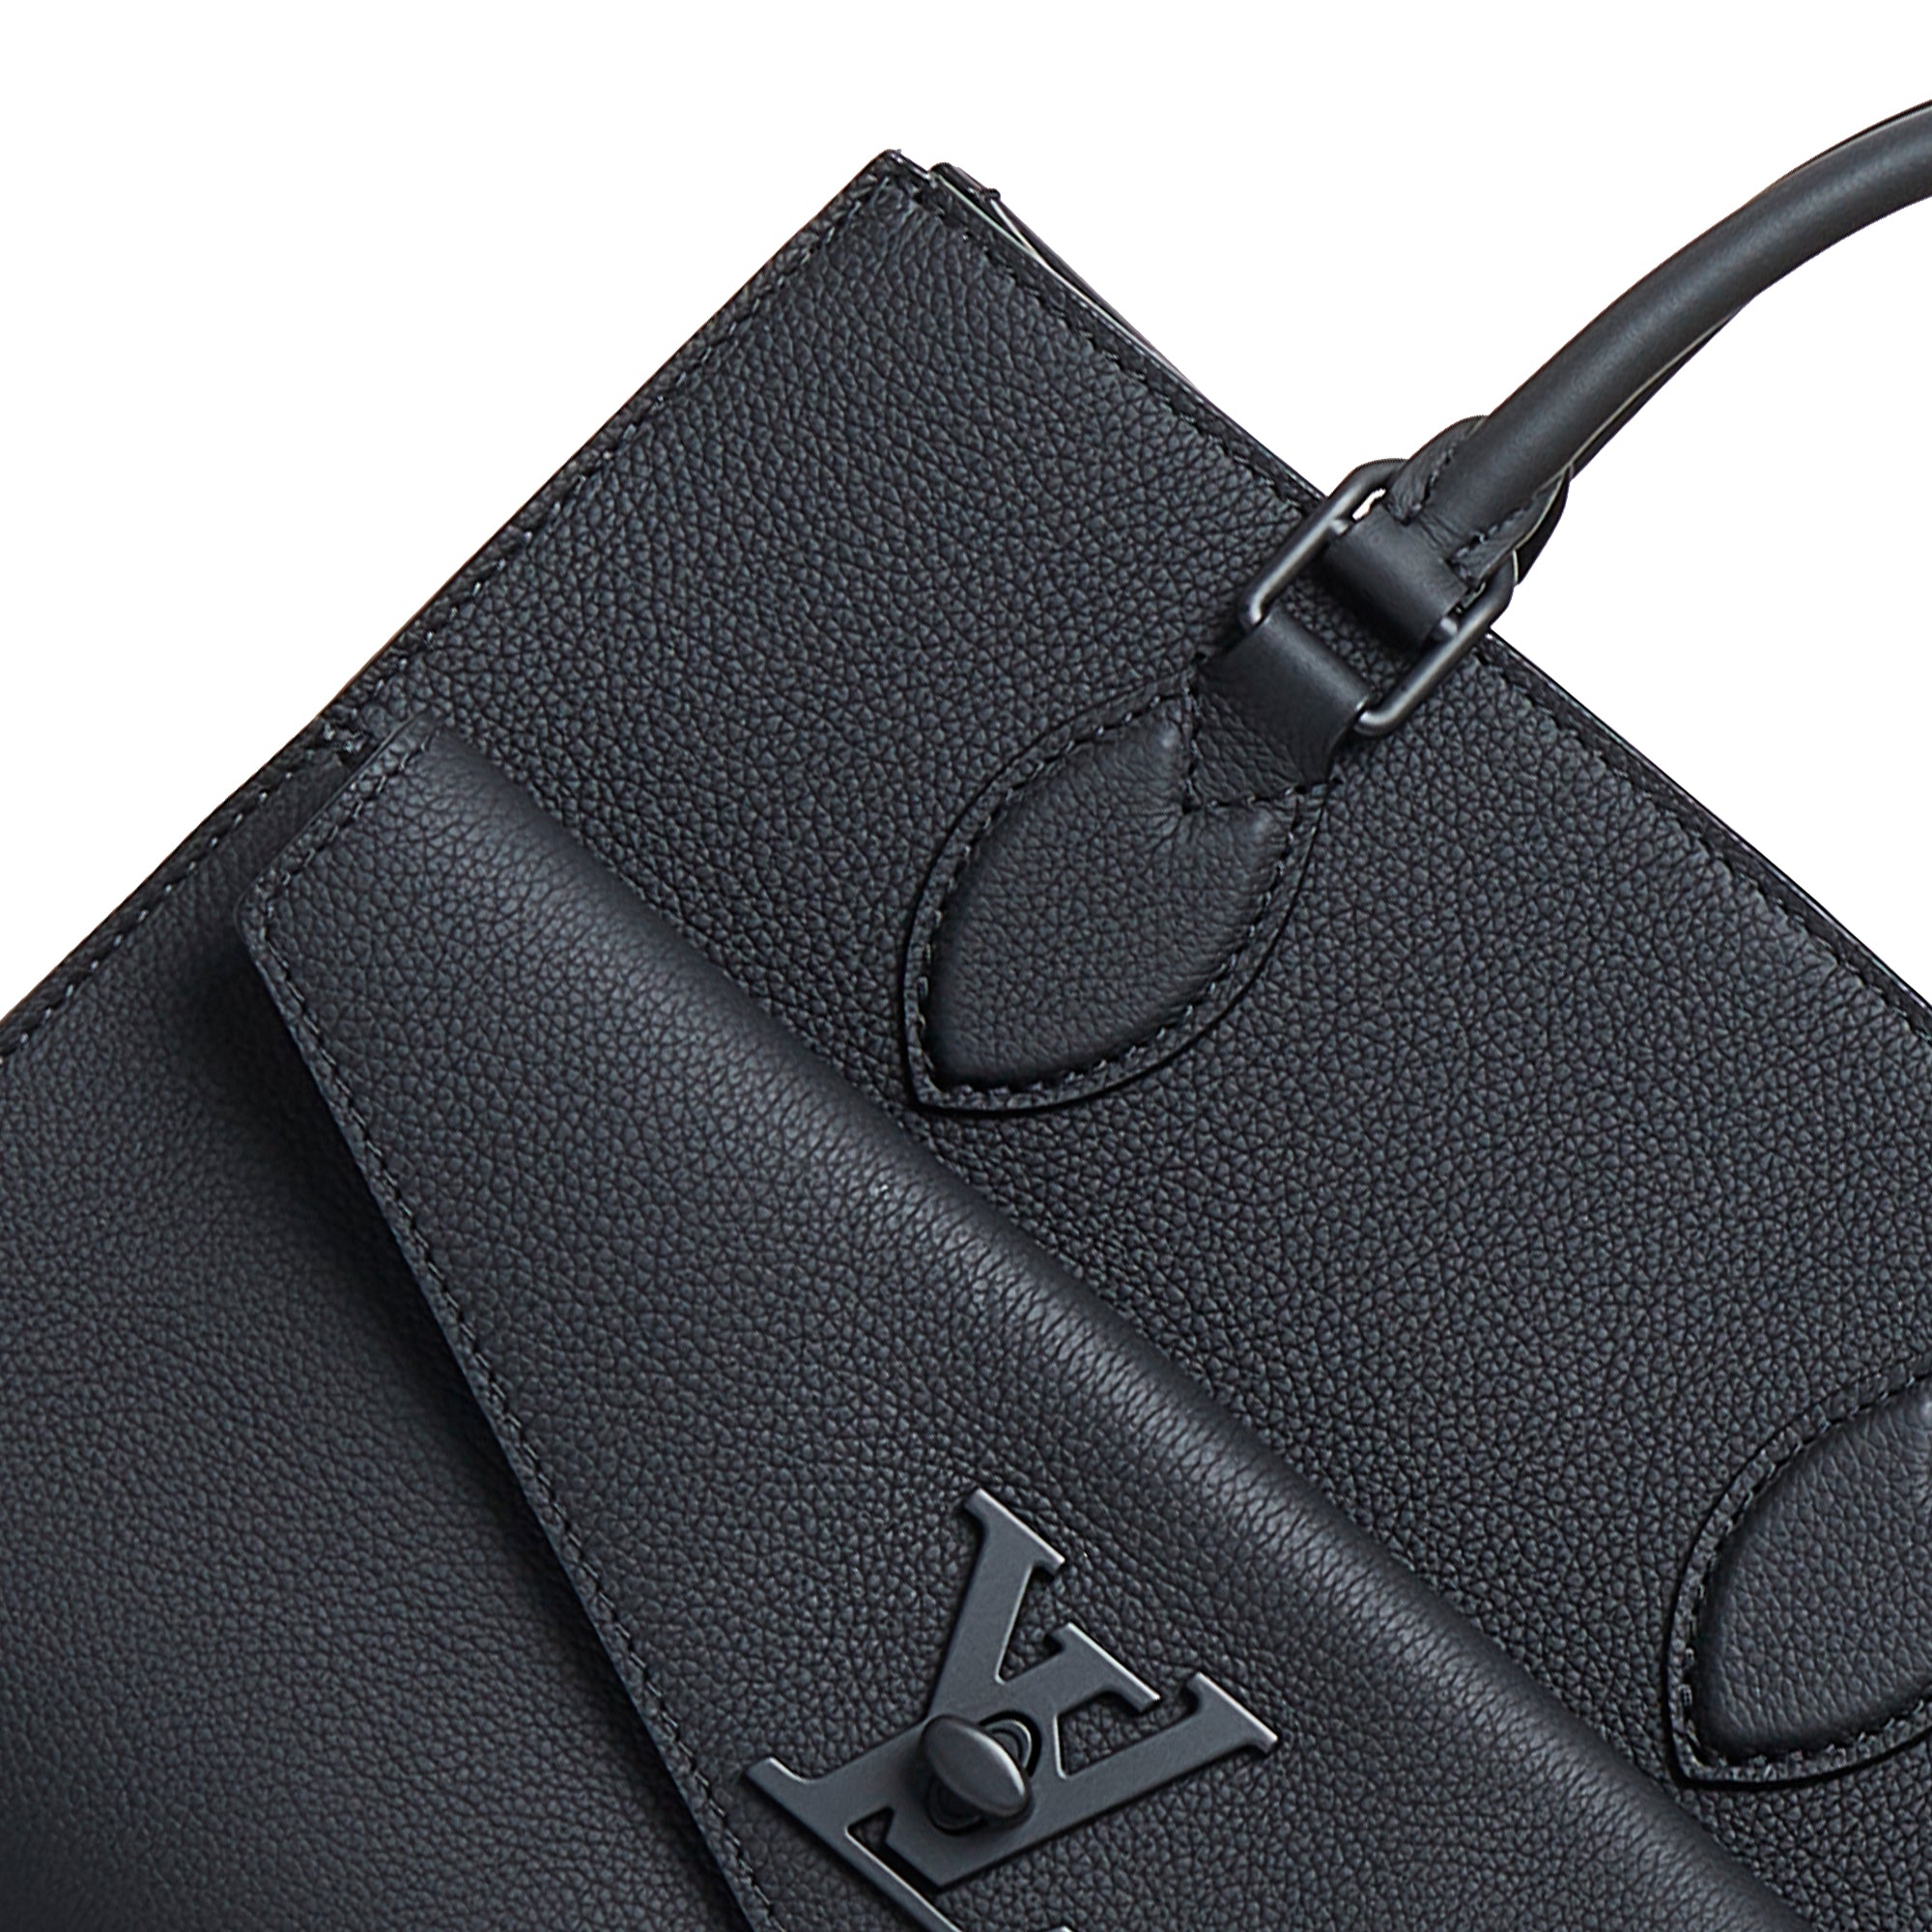 Louis Vuitton Lockme PM Black Calfskin